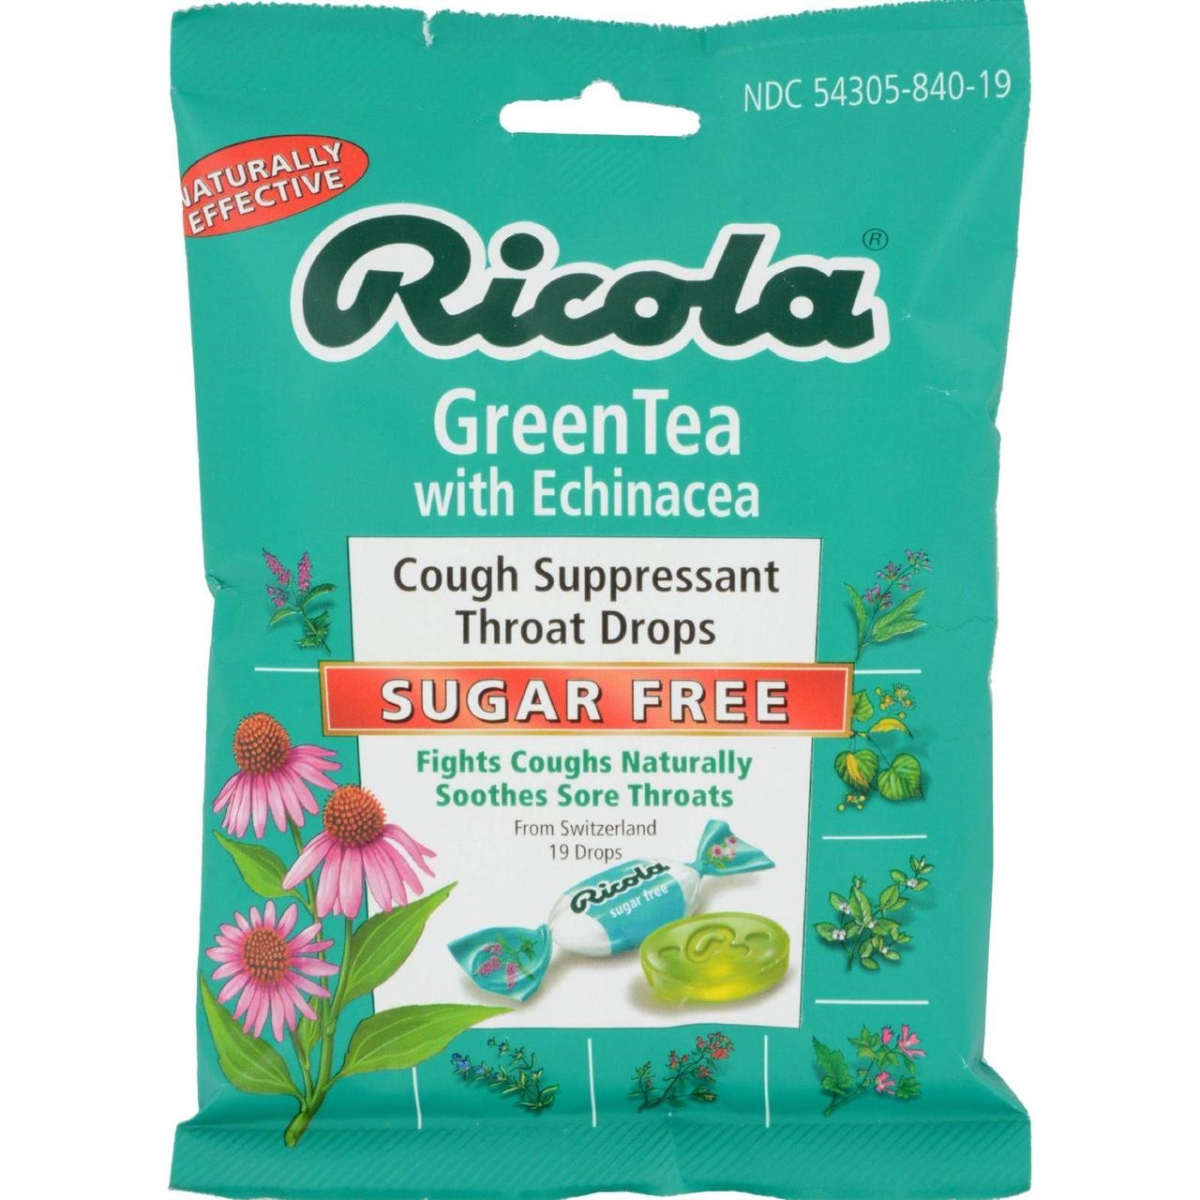 Hg0654731 Sugar Free Green Tea Cough Drops With Echinacea - 19 Drops, Case Of 12